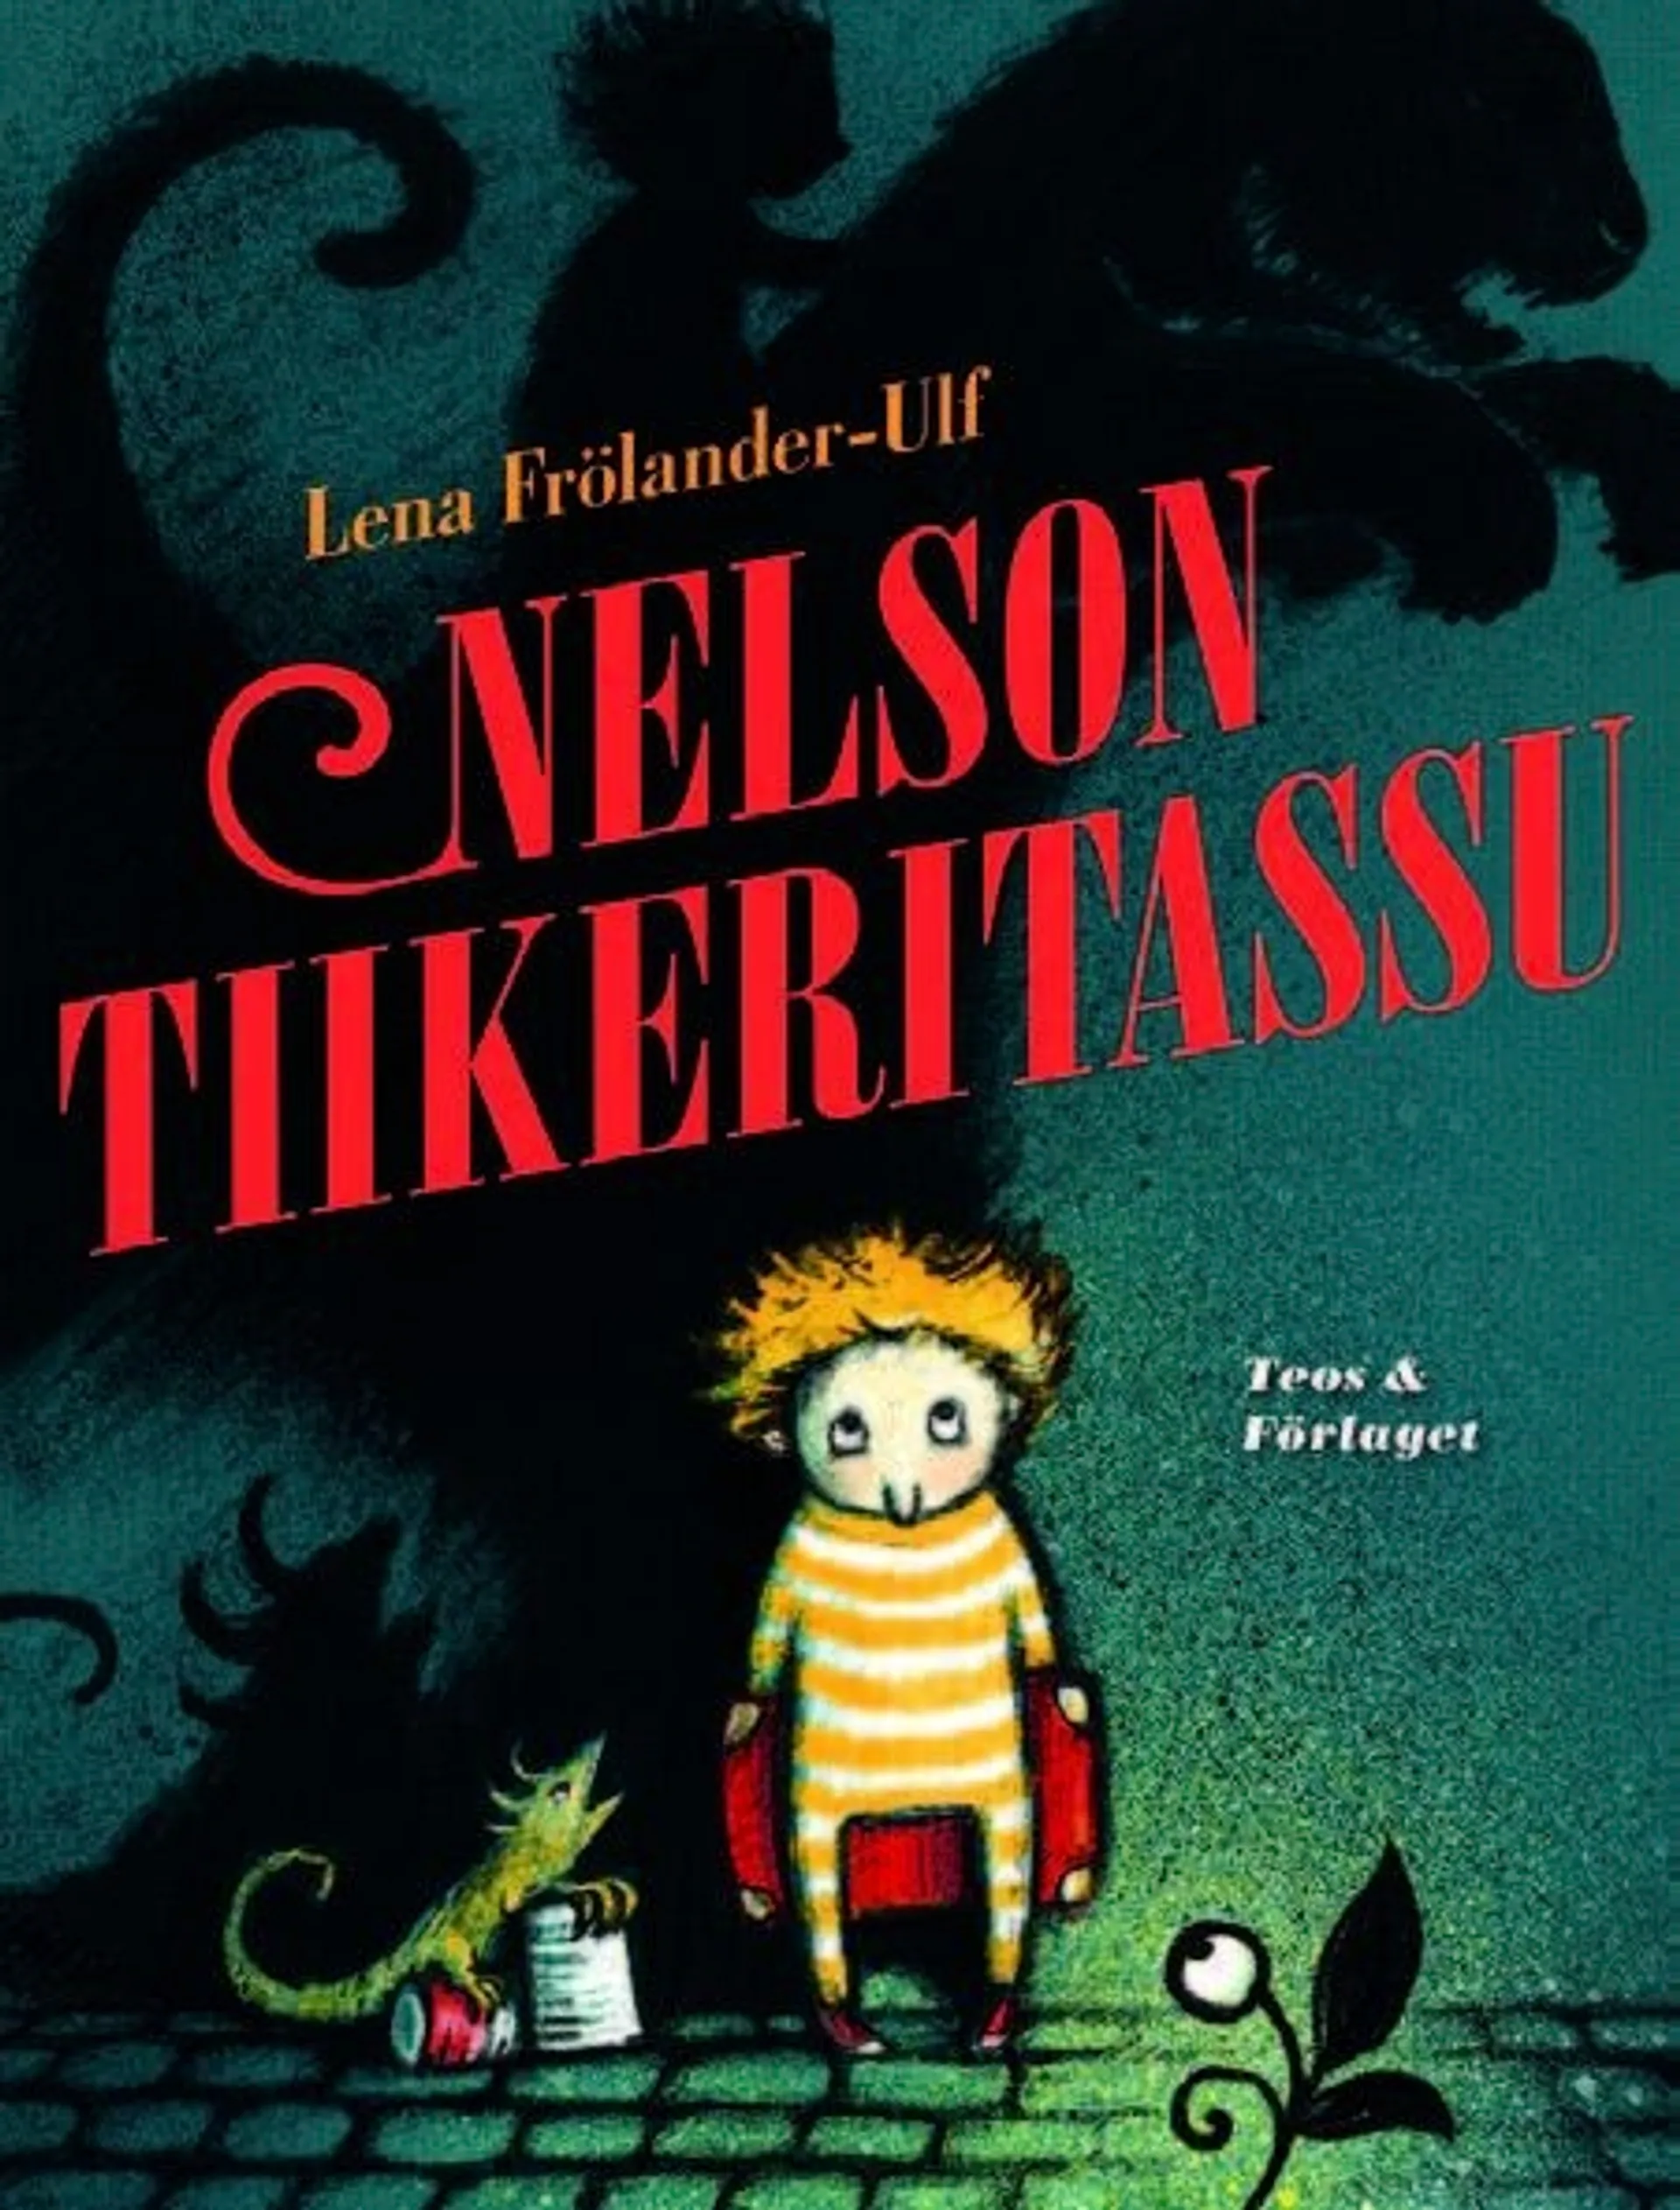 Frölander-Ulf, Nelson Tiikeritassu